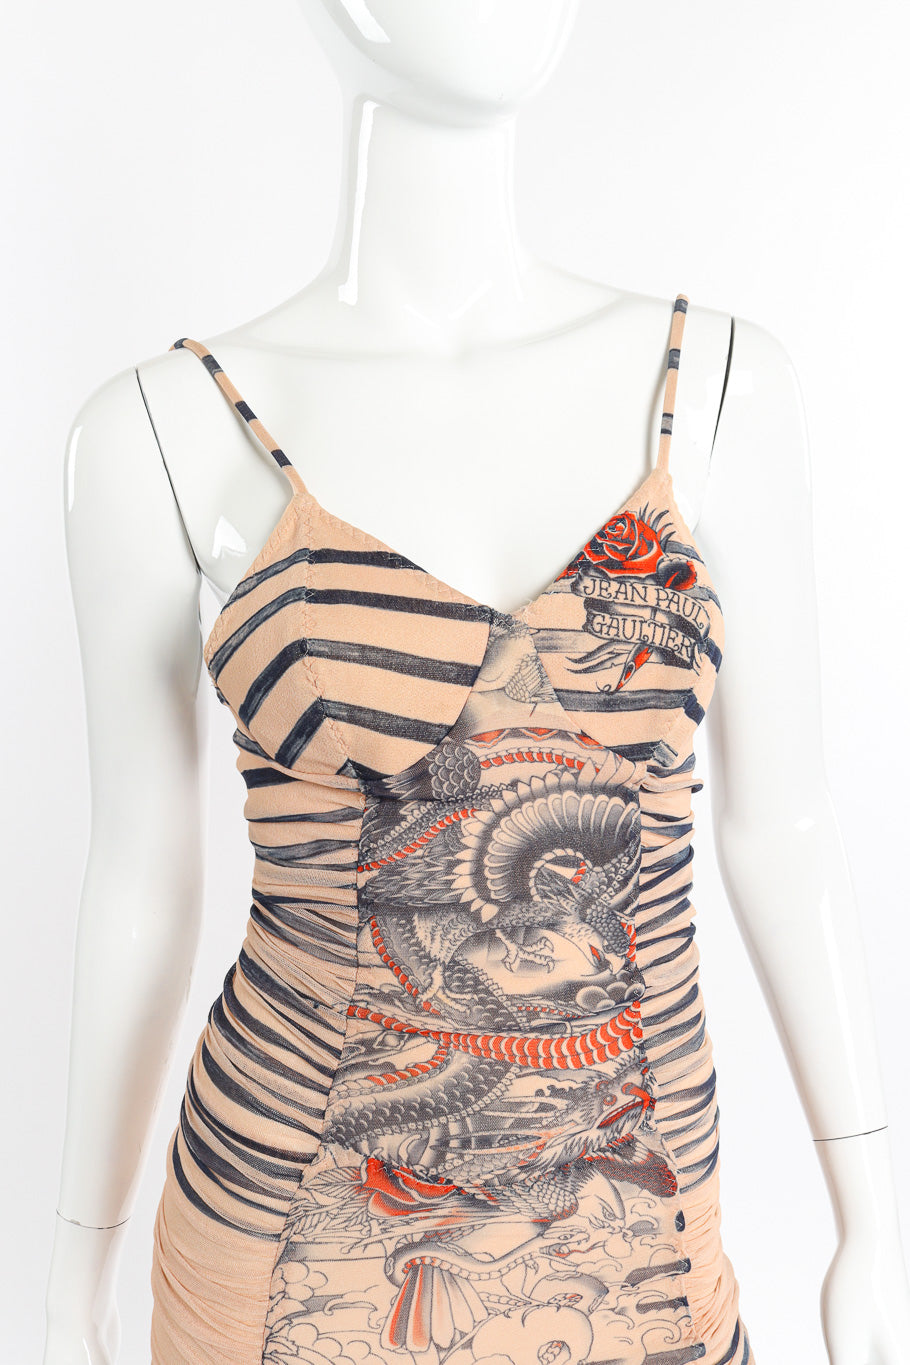 Jean Paul Gaultier 2012 S/S Soleil Tattoo Dress on mannequin chest close @recessla